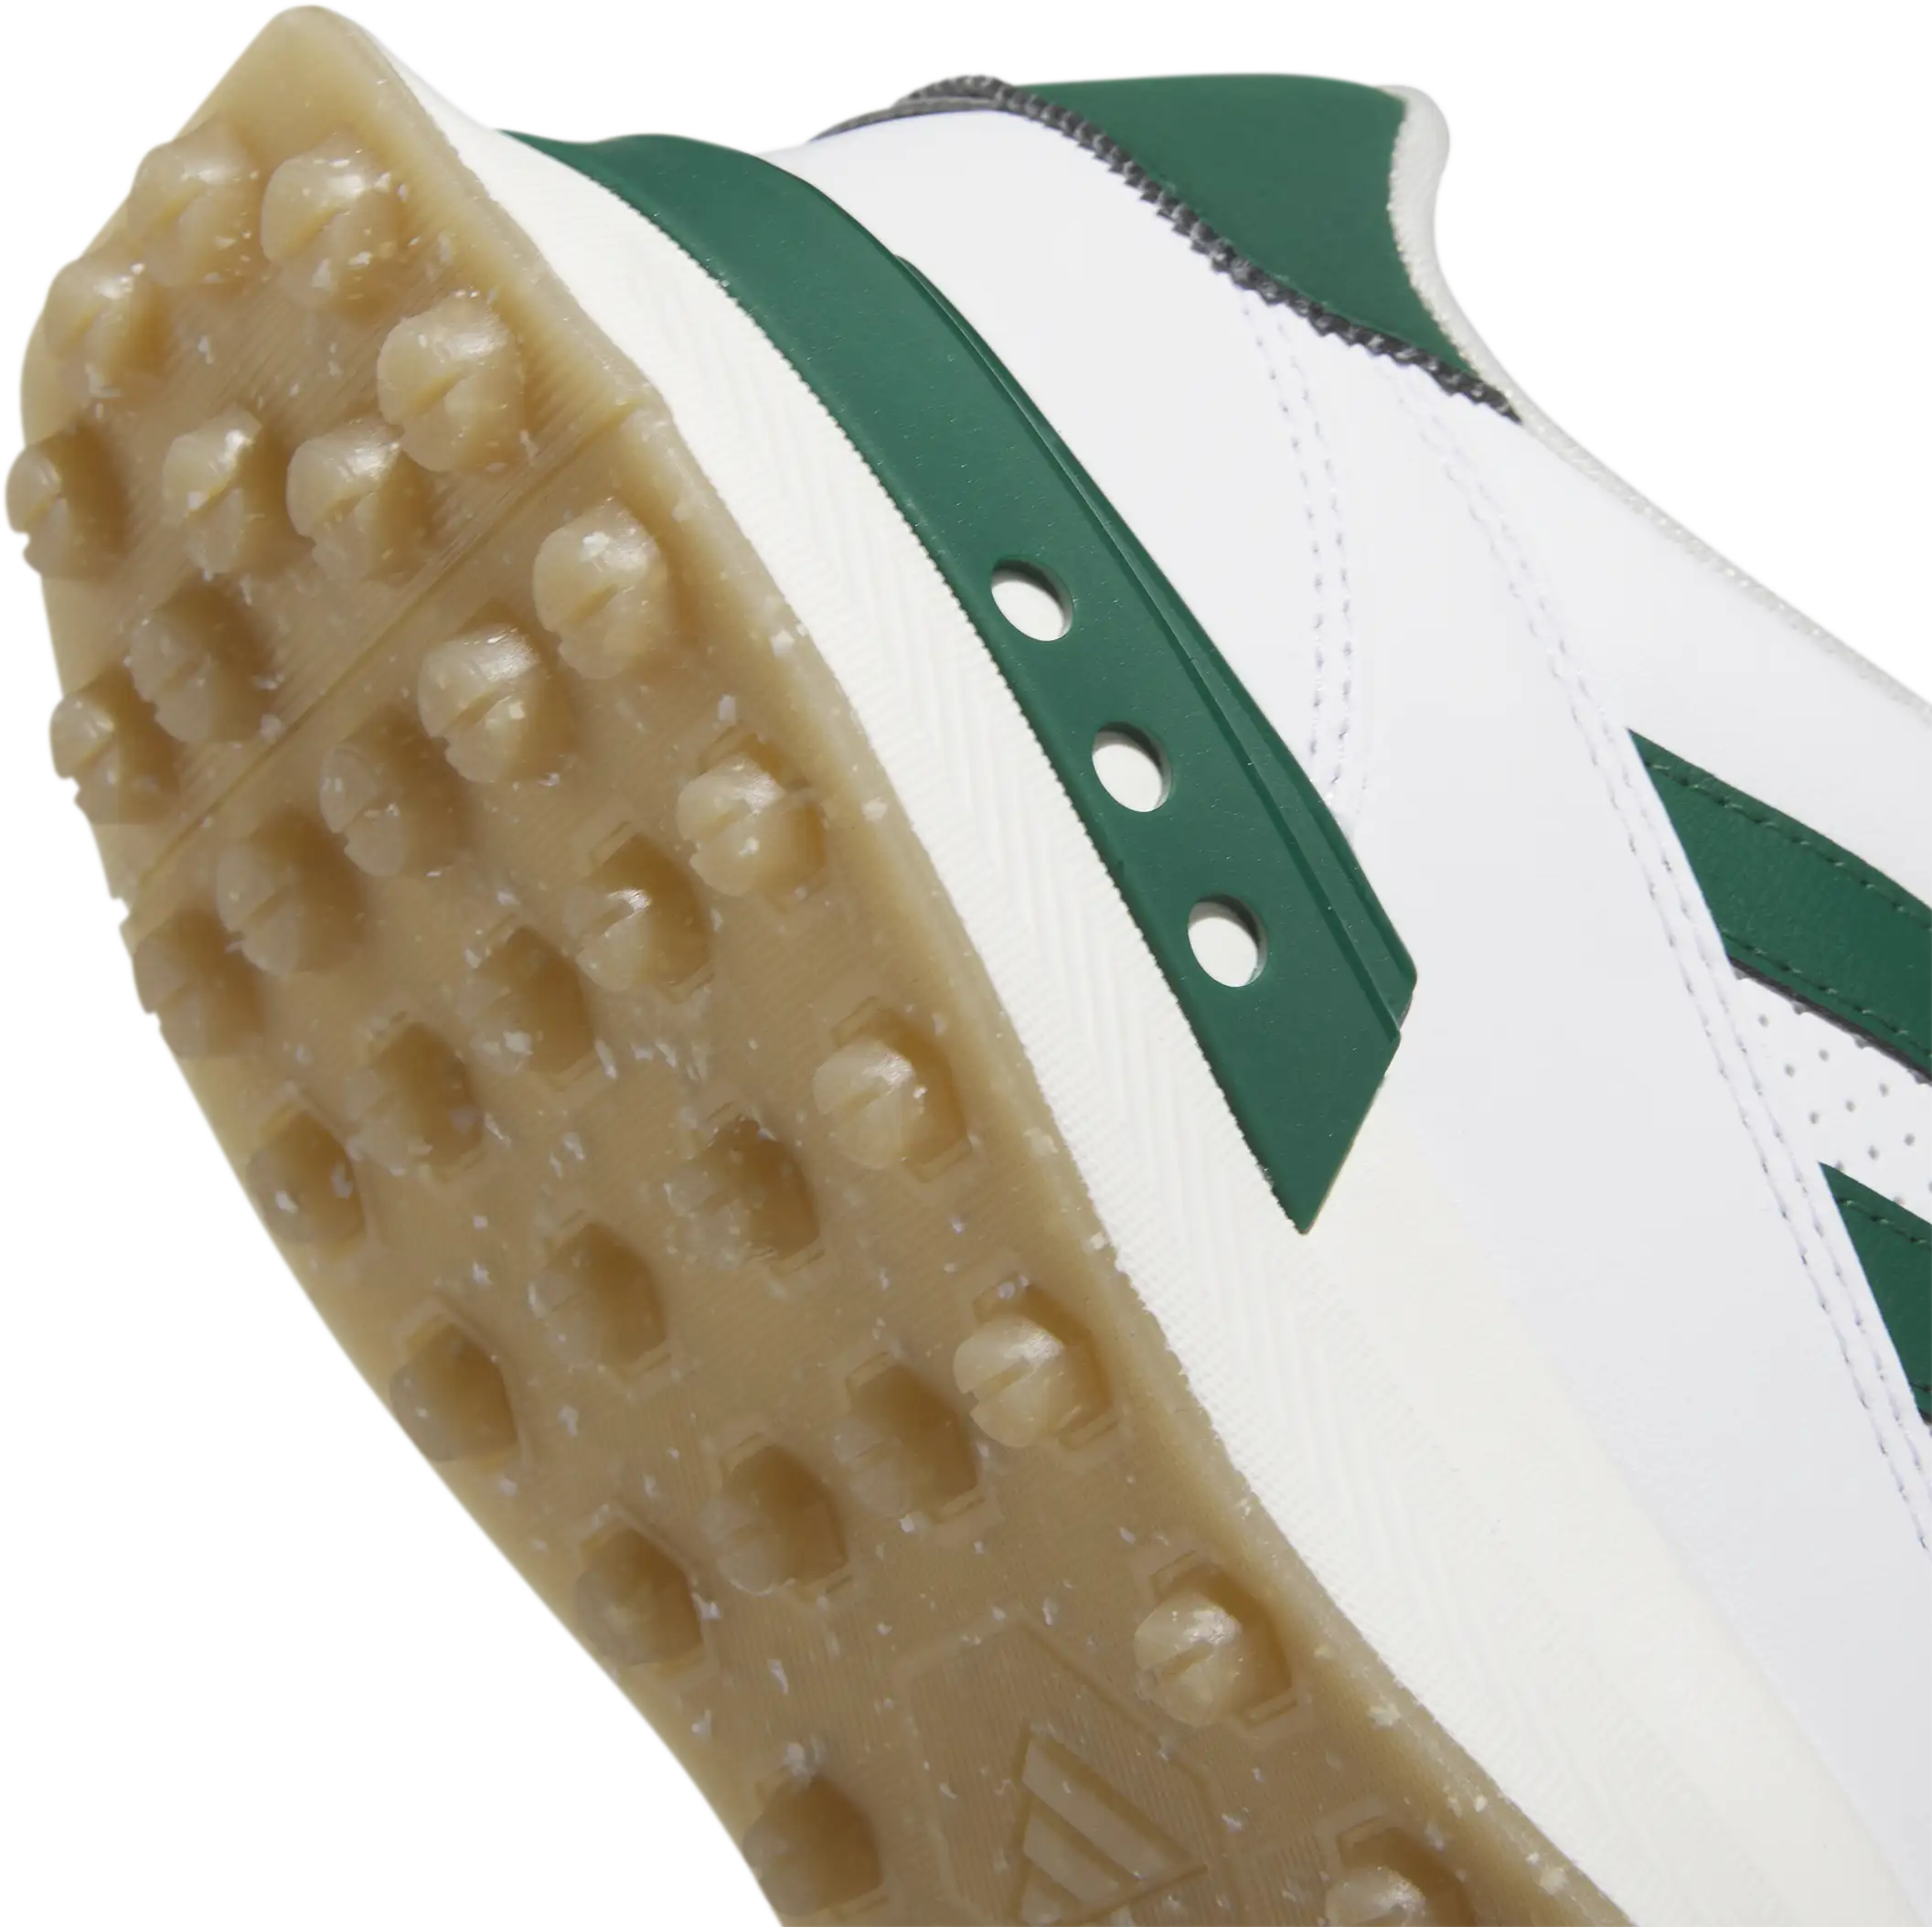 adidas S2G SL Leather 2024 Golfschuh, weiß/grün